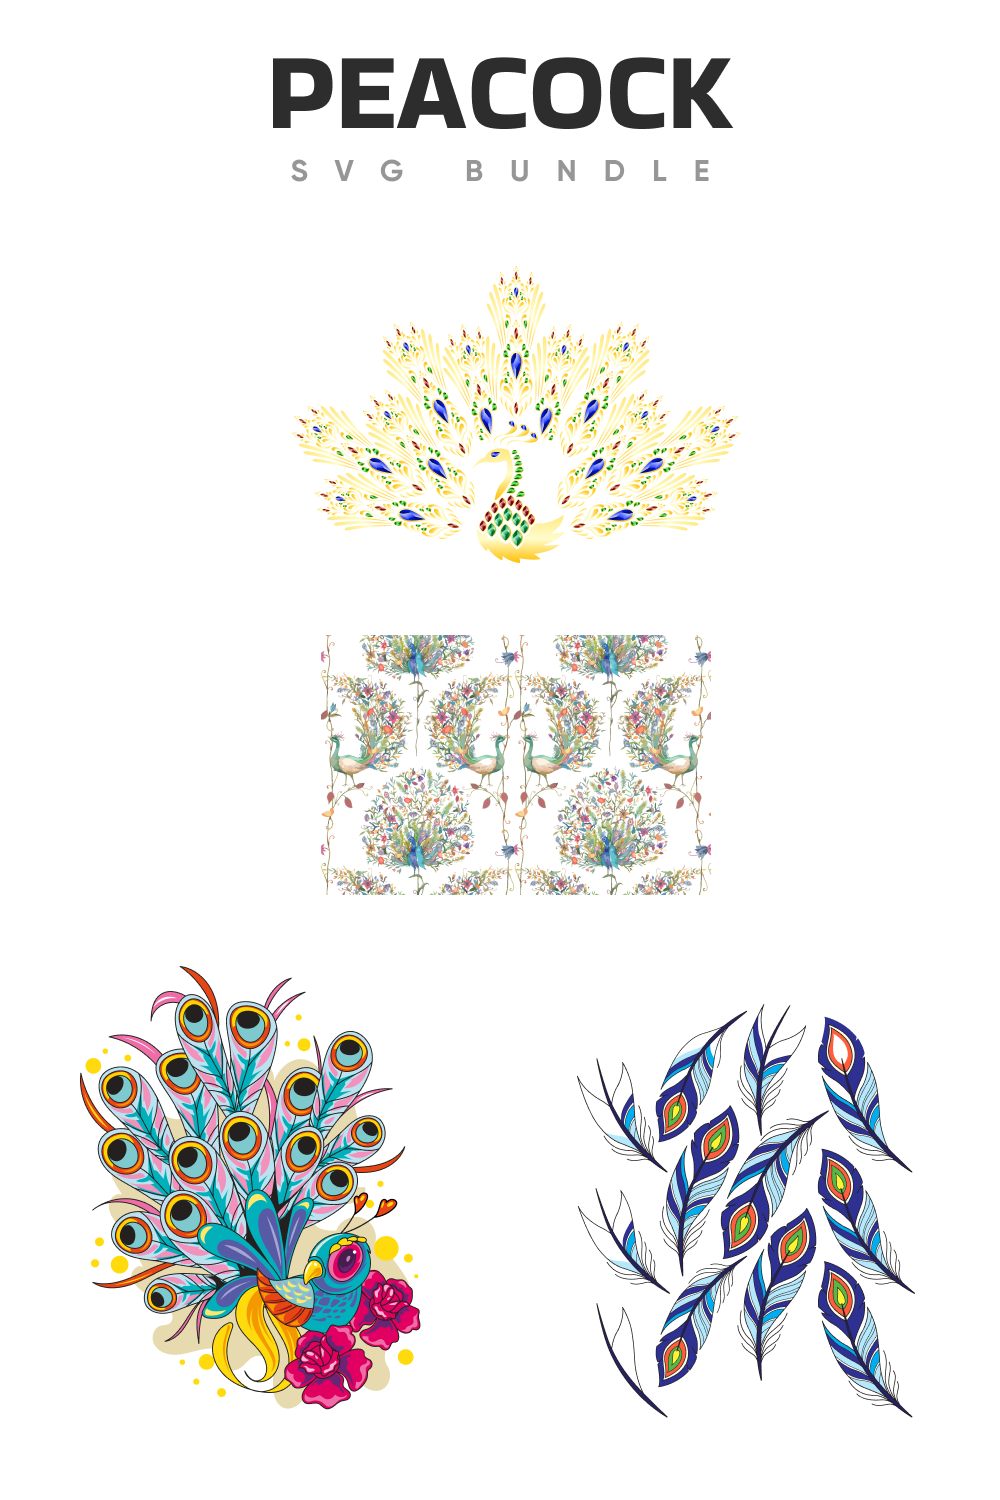 The peacock svg bundle includes four different designs.